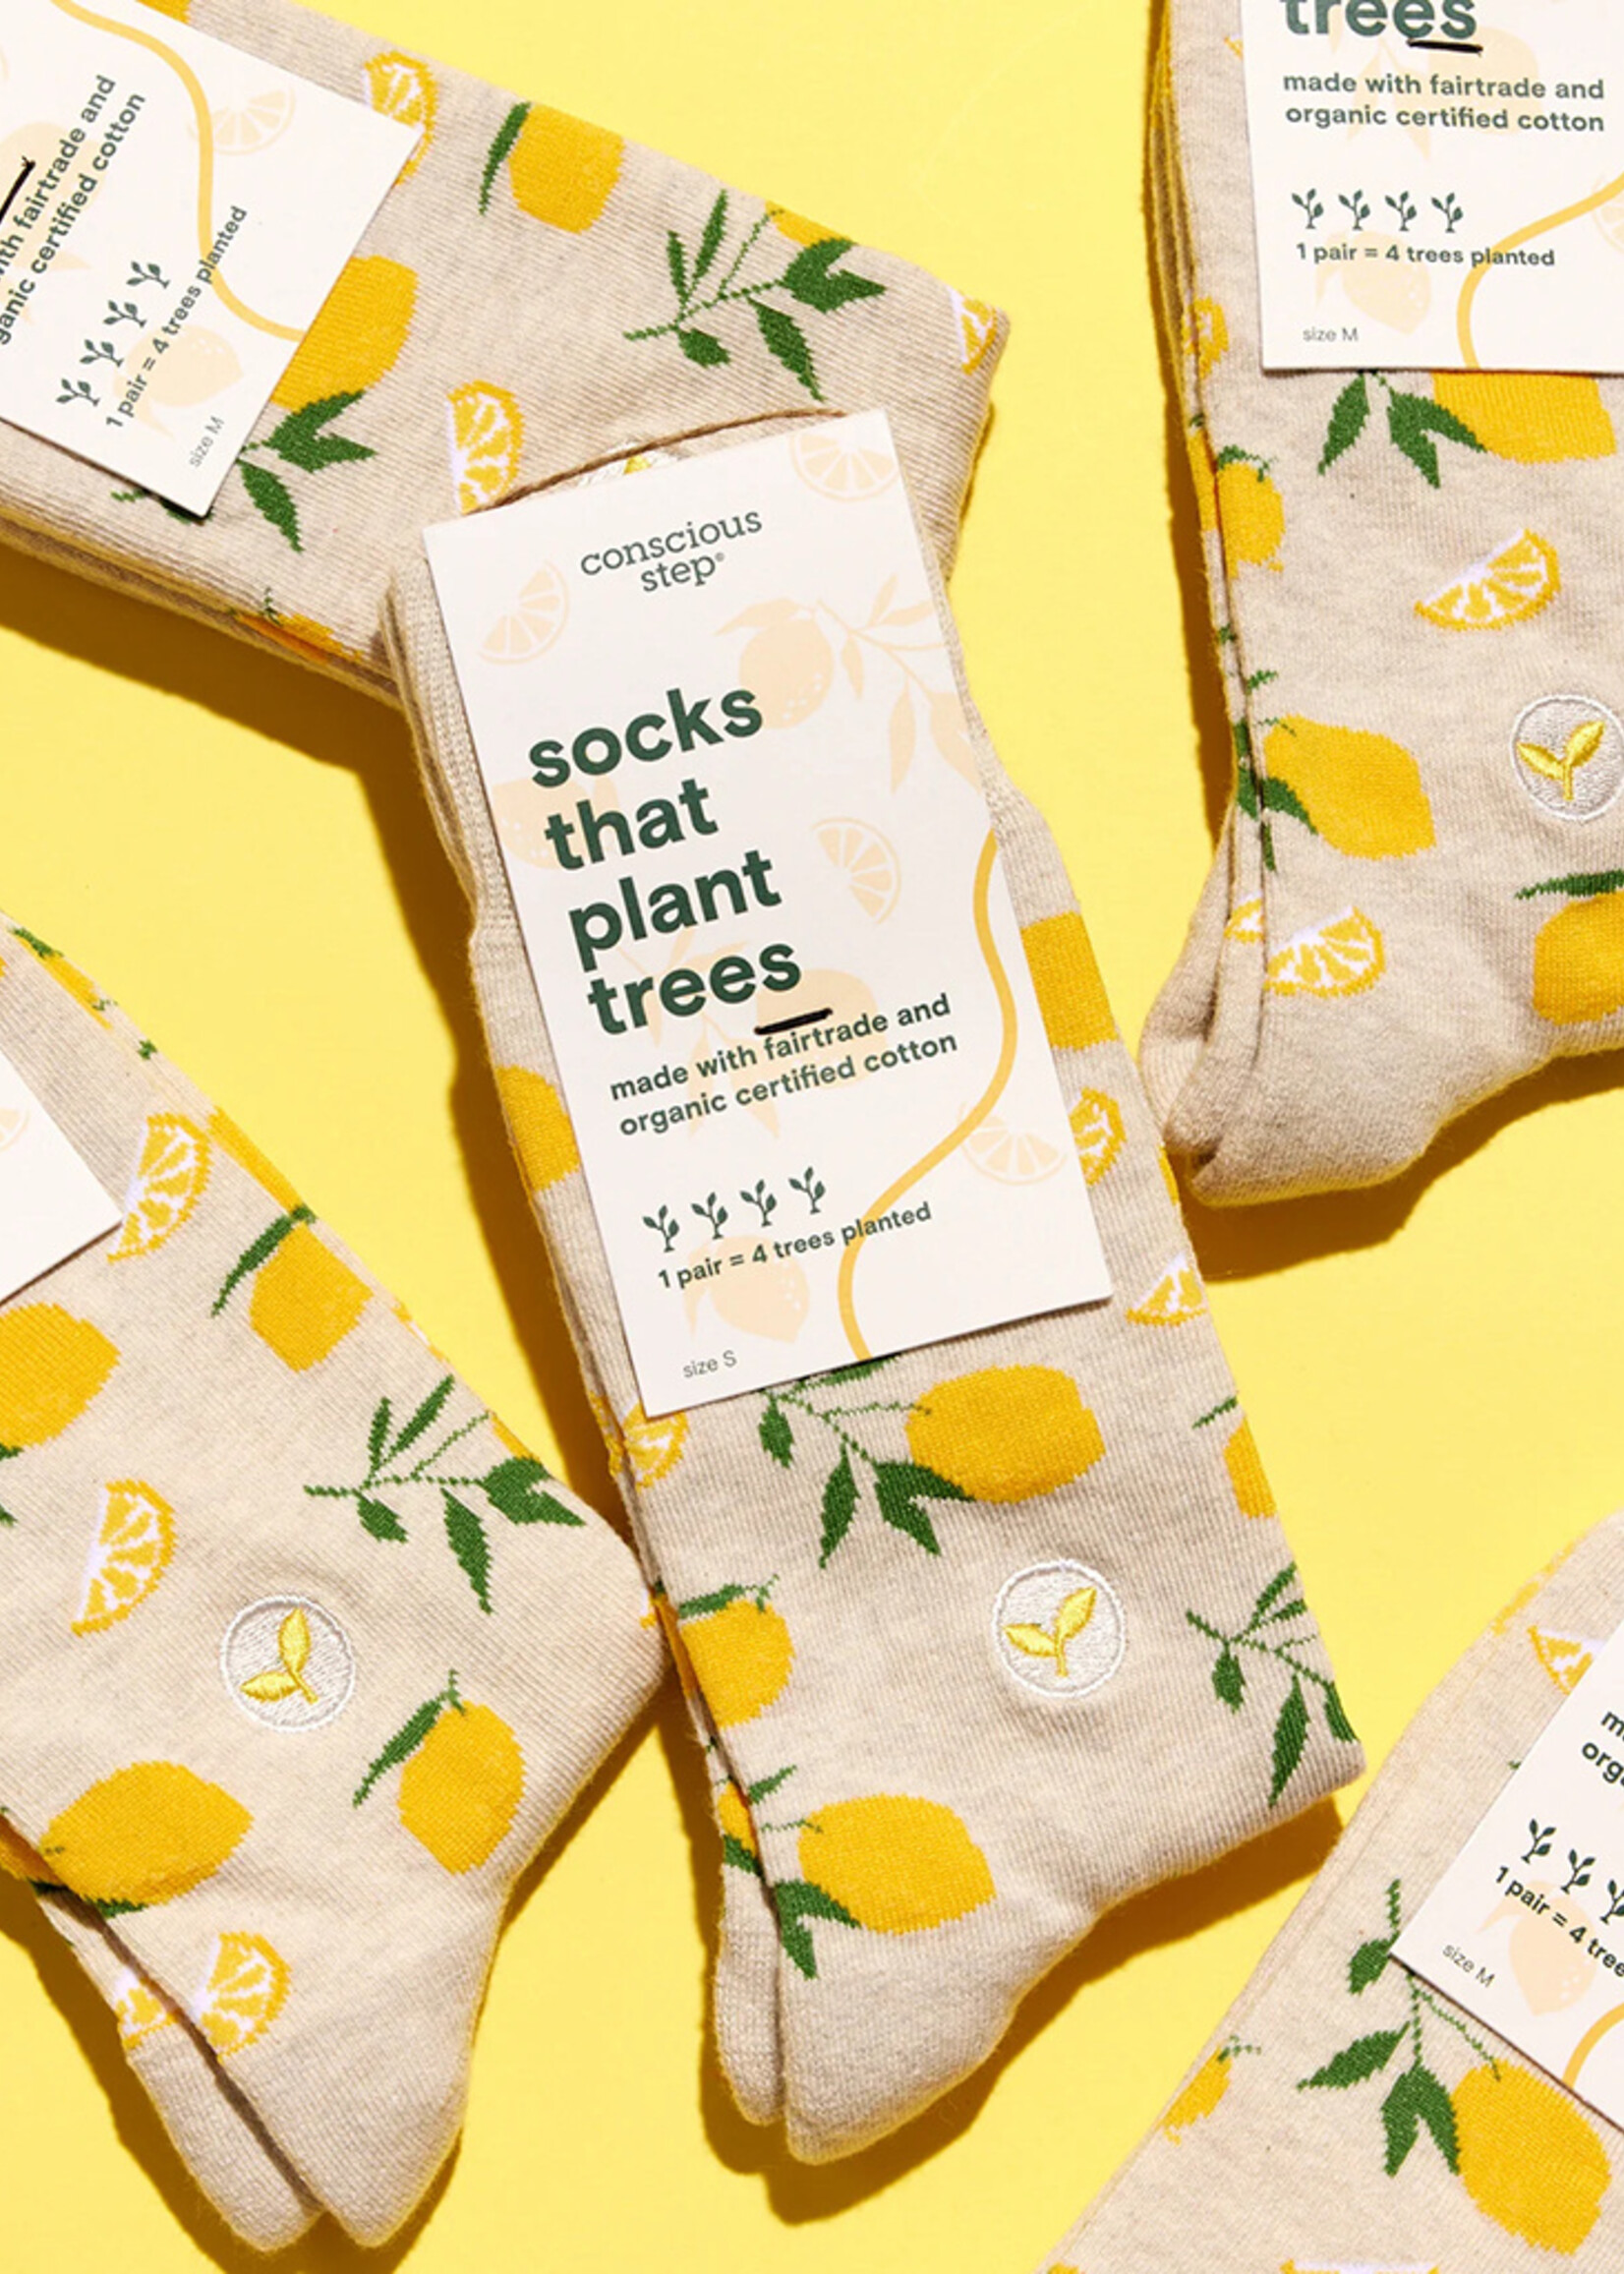 Conscious Step Men's Lemon Socks that Plant Trees